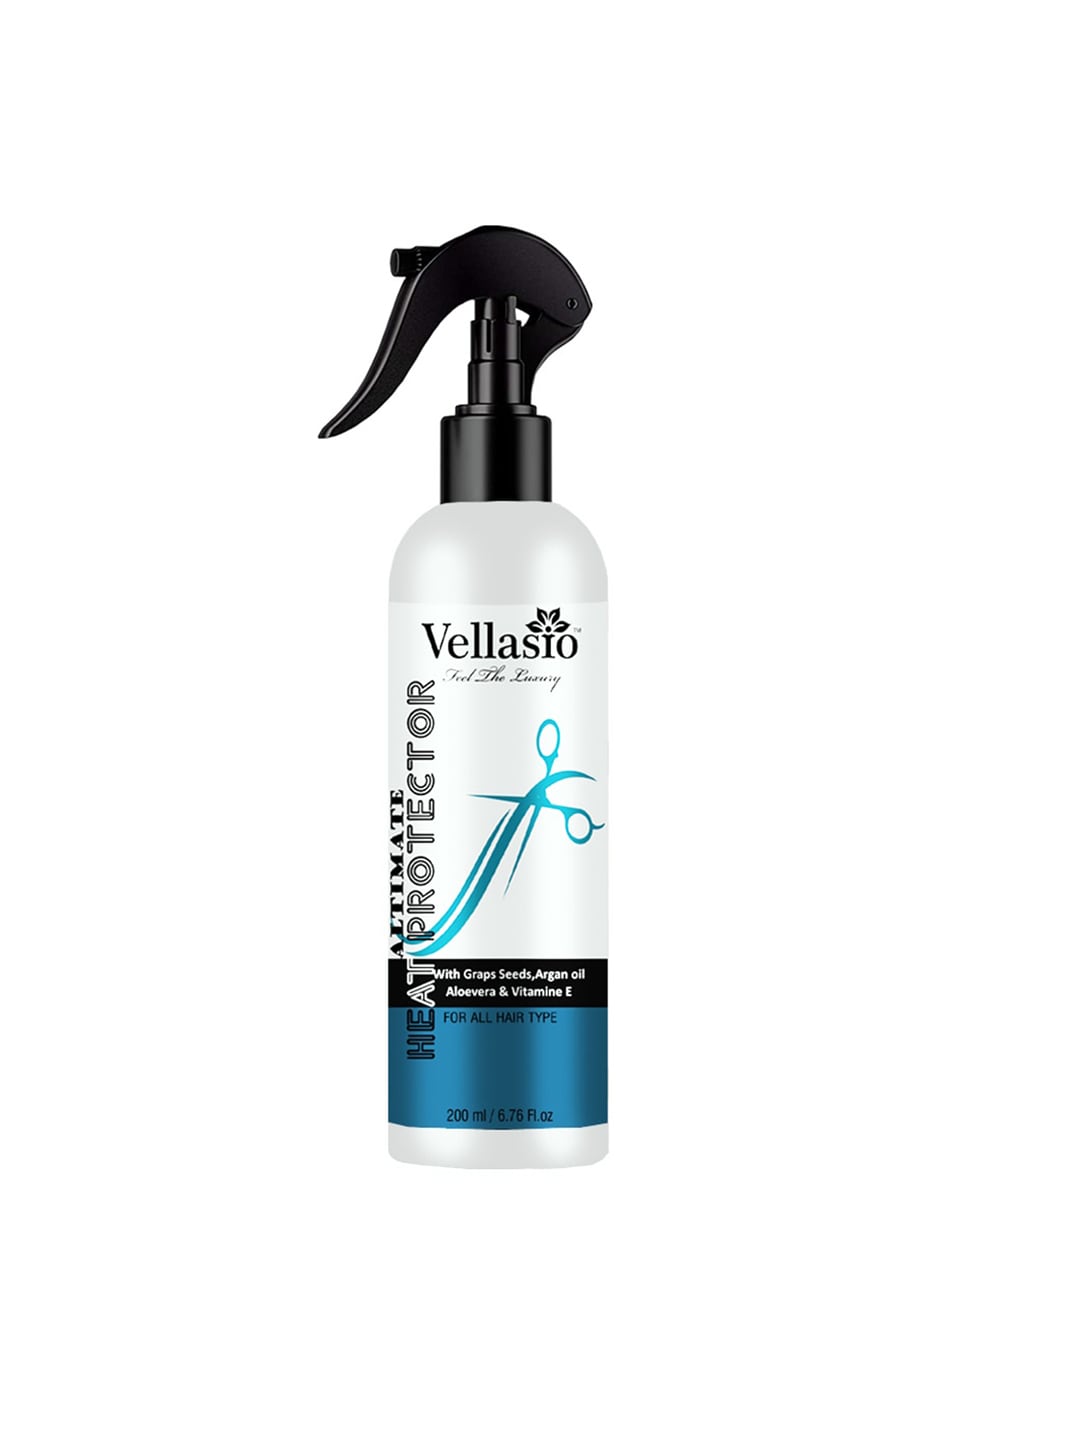 Vellasio Heat Protection Hair Spray 200ml Price in India